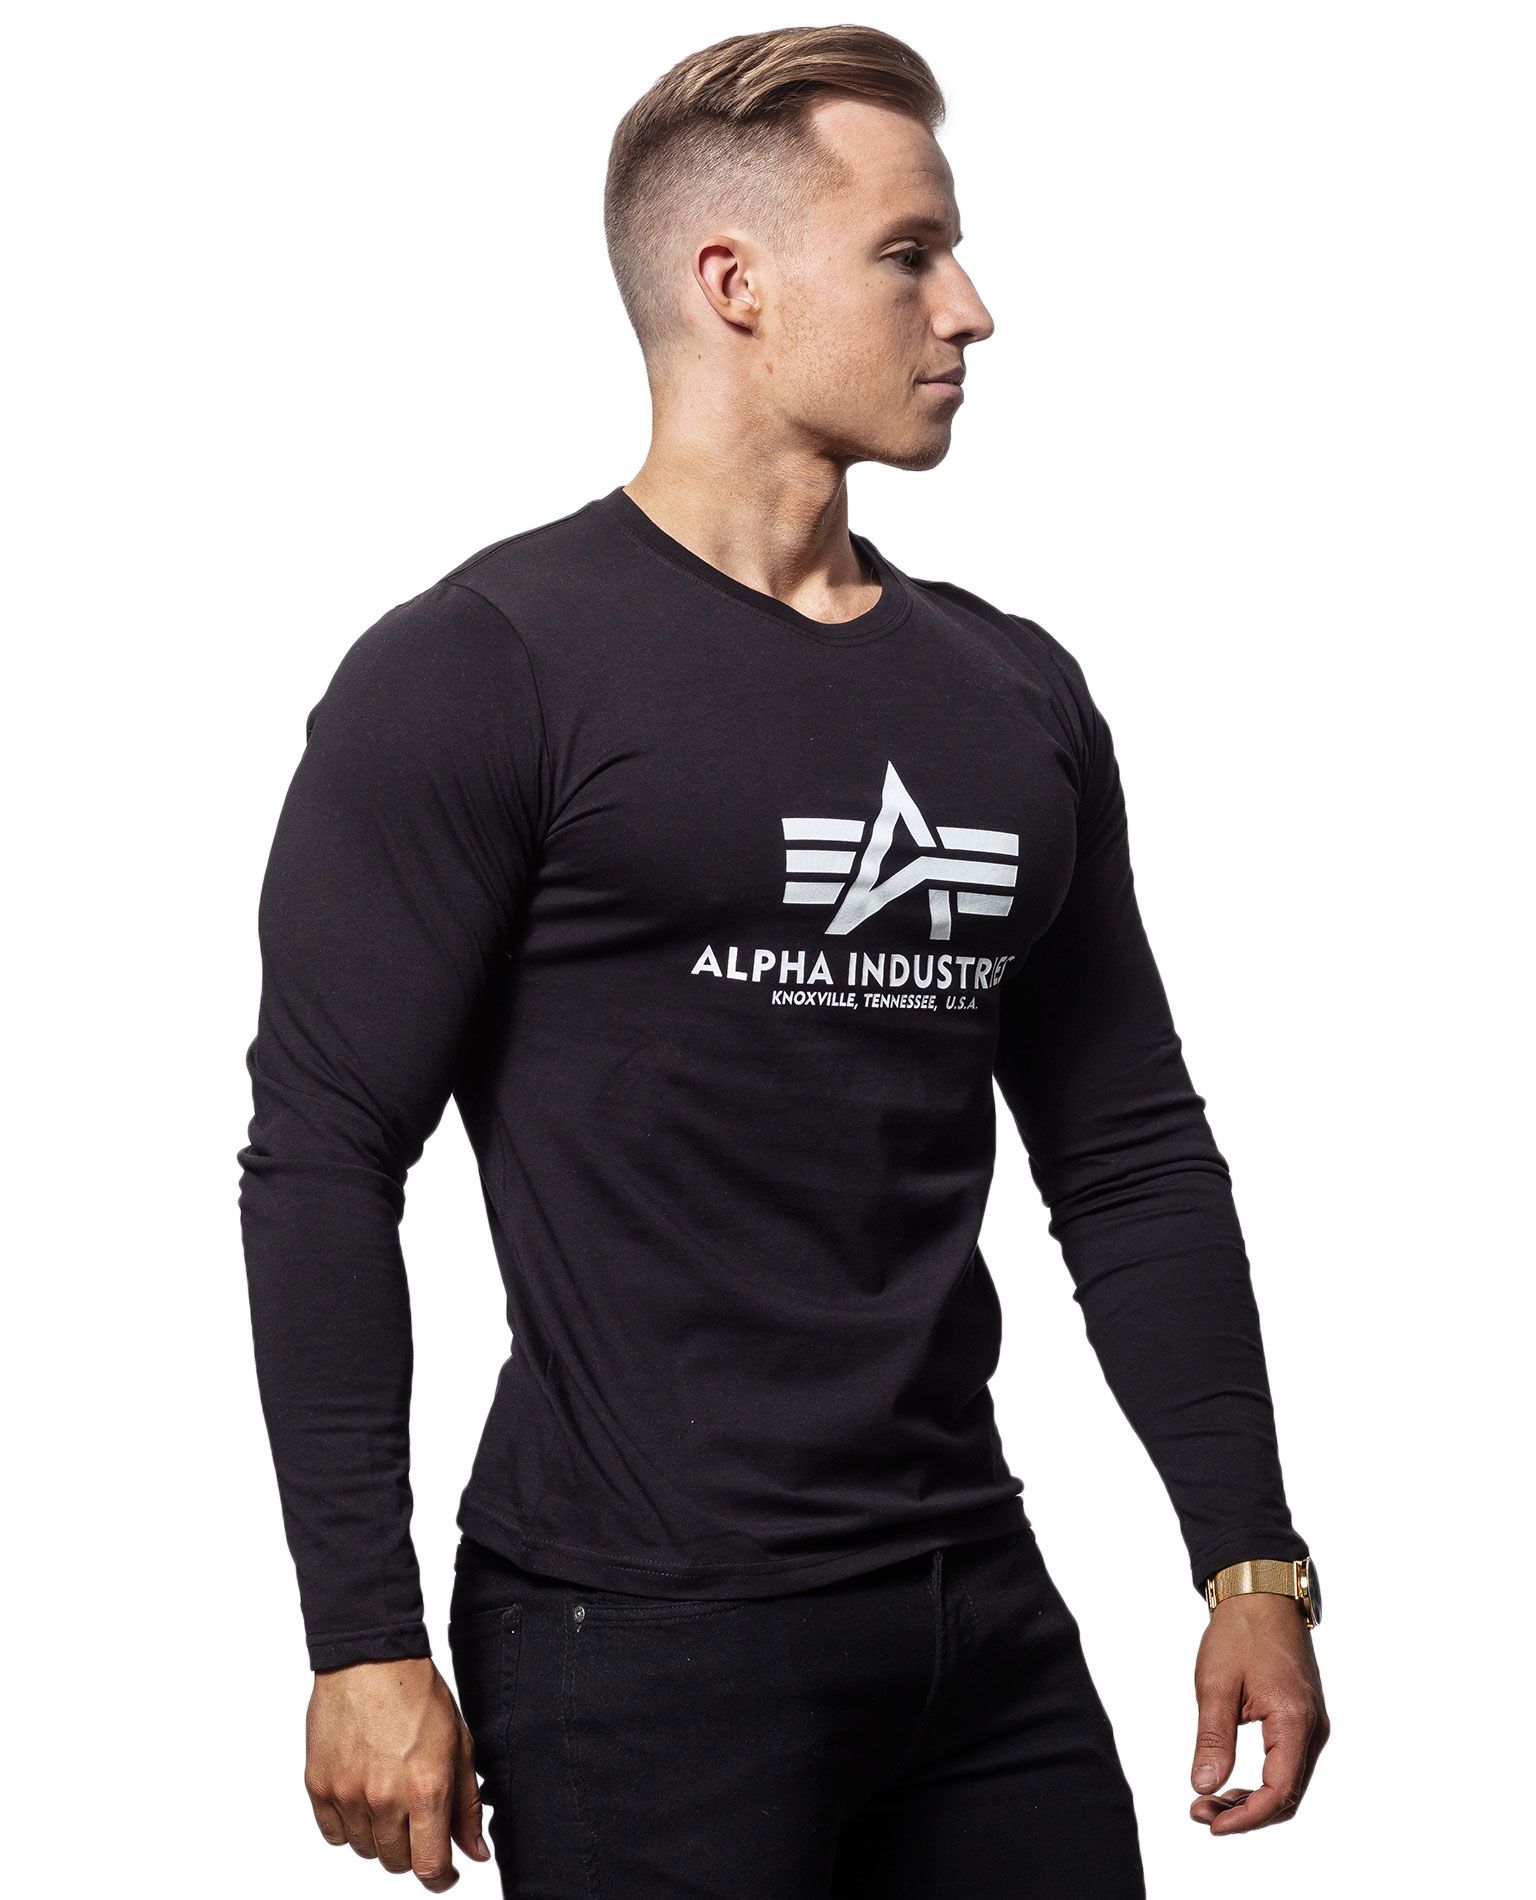 Alpha Industries Mens Black/Grey Long Sleeve T-Shirt XL 